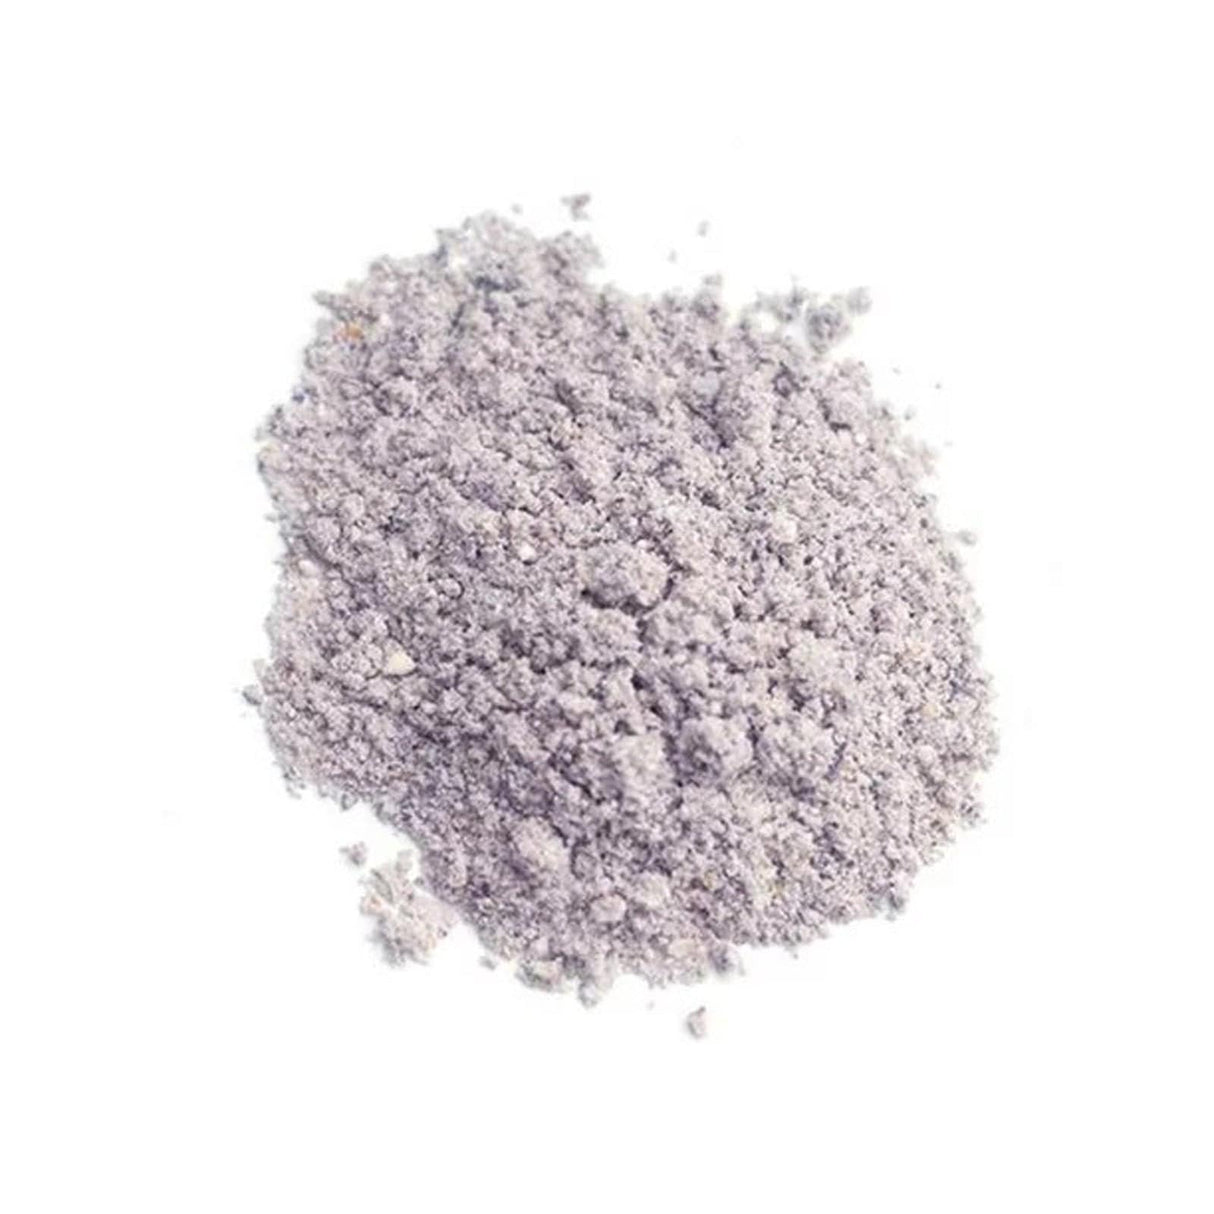 Purple Corn Flour (Harina Morada)